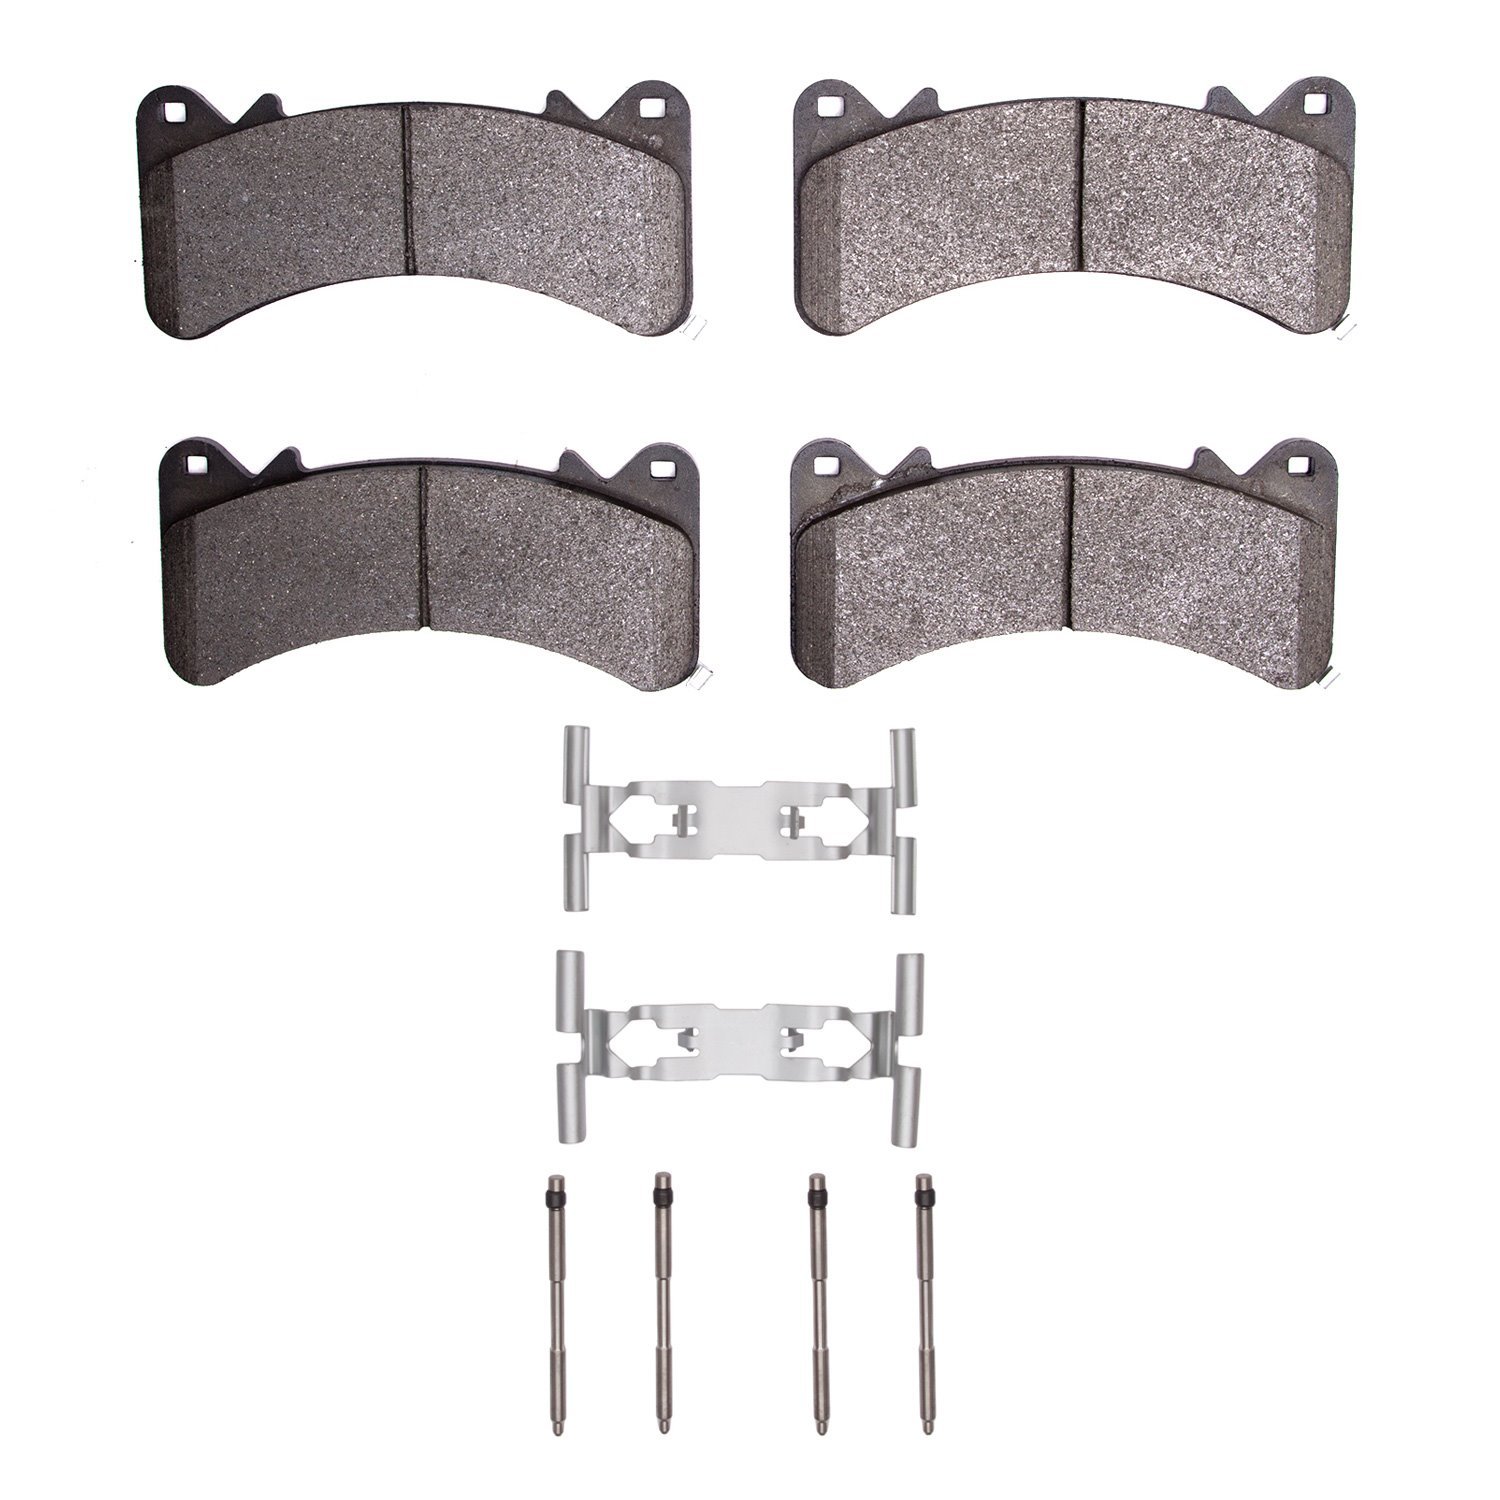 Ceramic Brake Pads & Hardware Kit, Fits Select GM, Position: Front